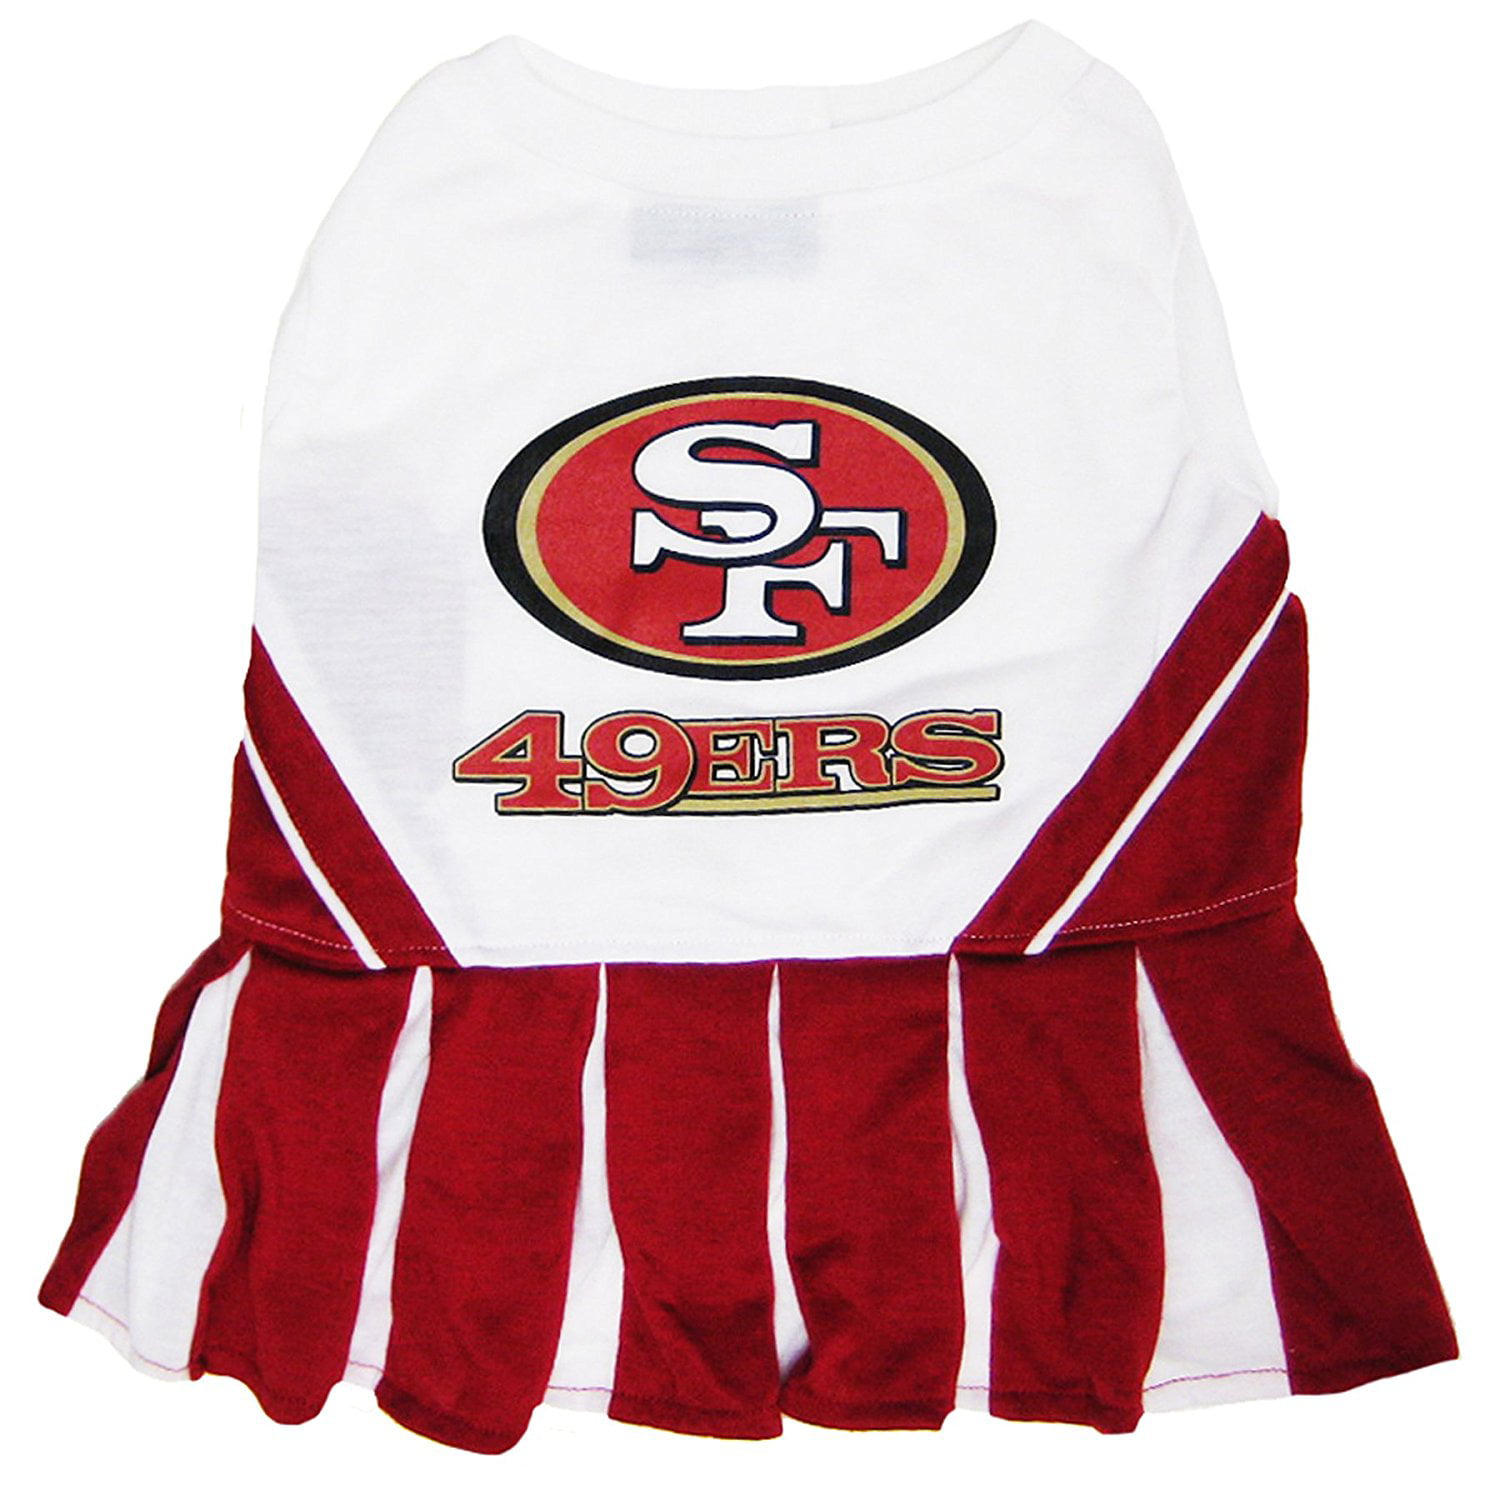 Womens NFL San Francisco 49ers Dresses, Clothing